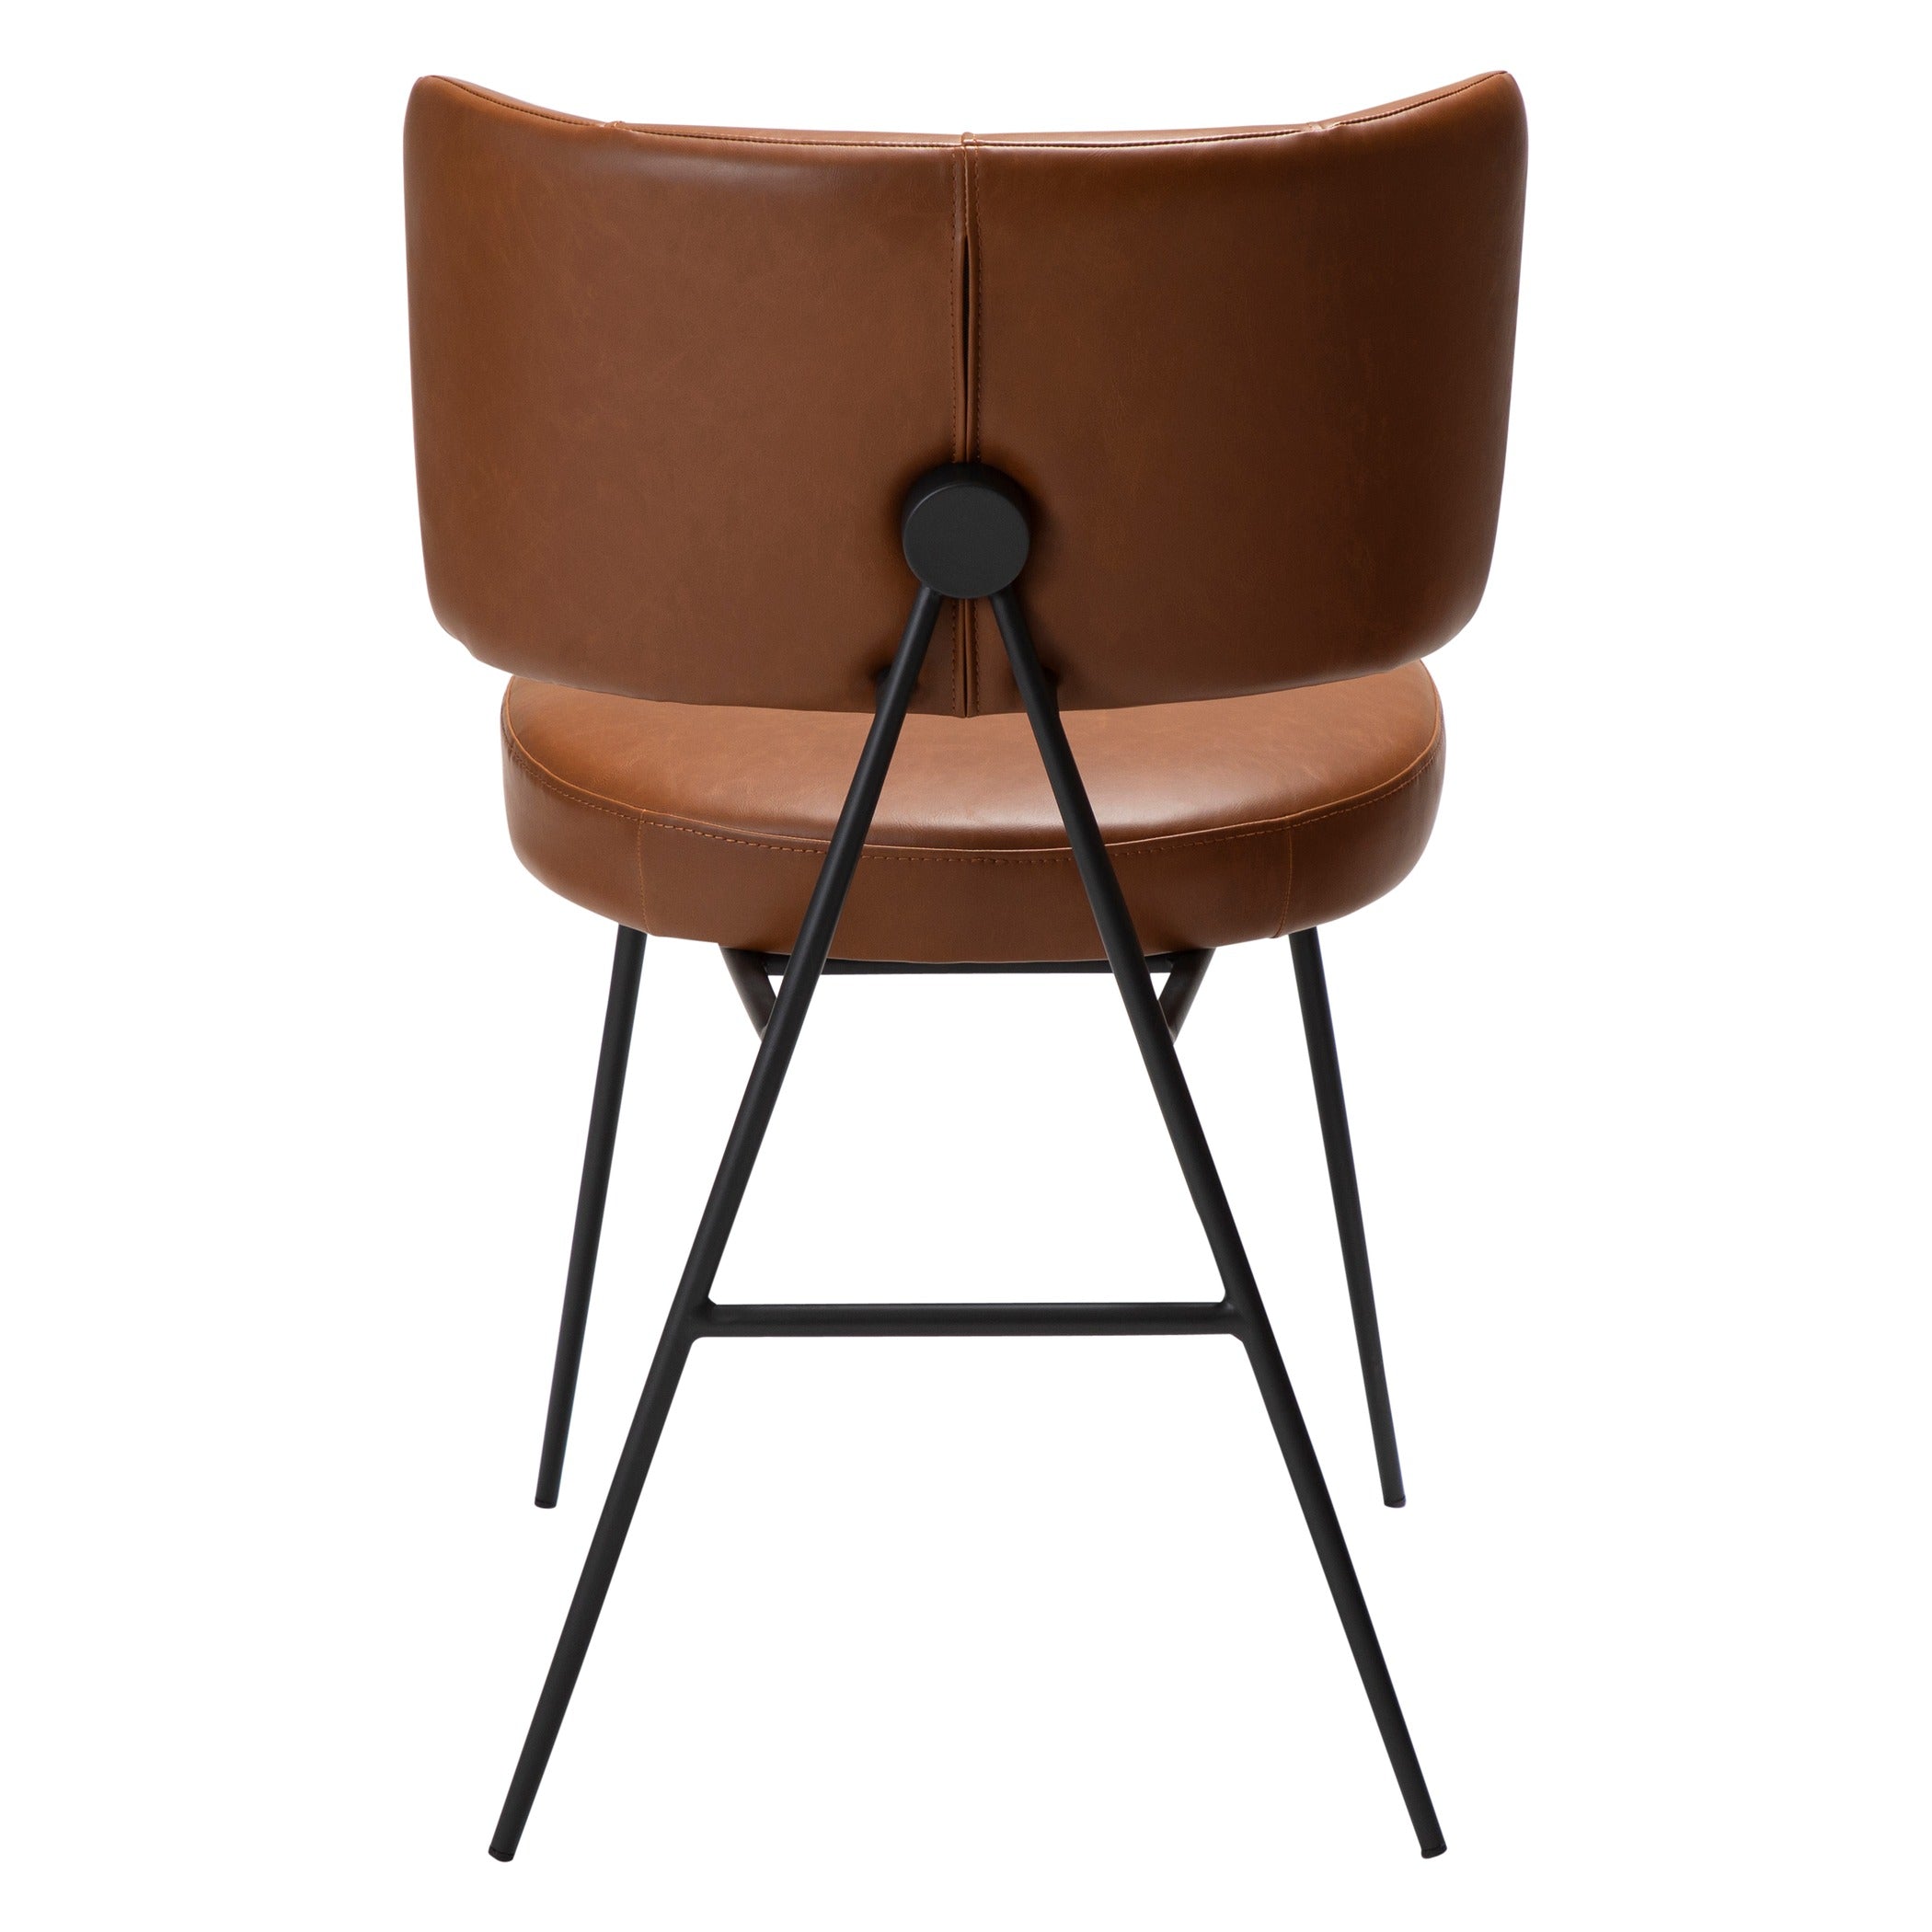 ROOST kėdė, ruda spalva